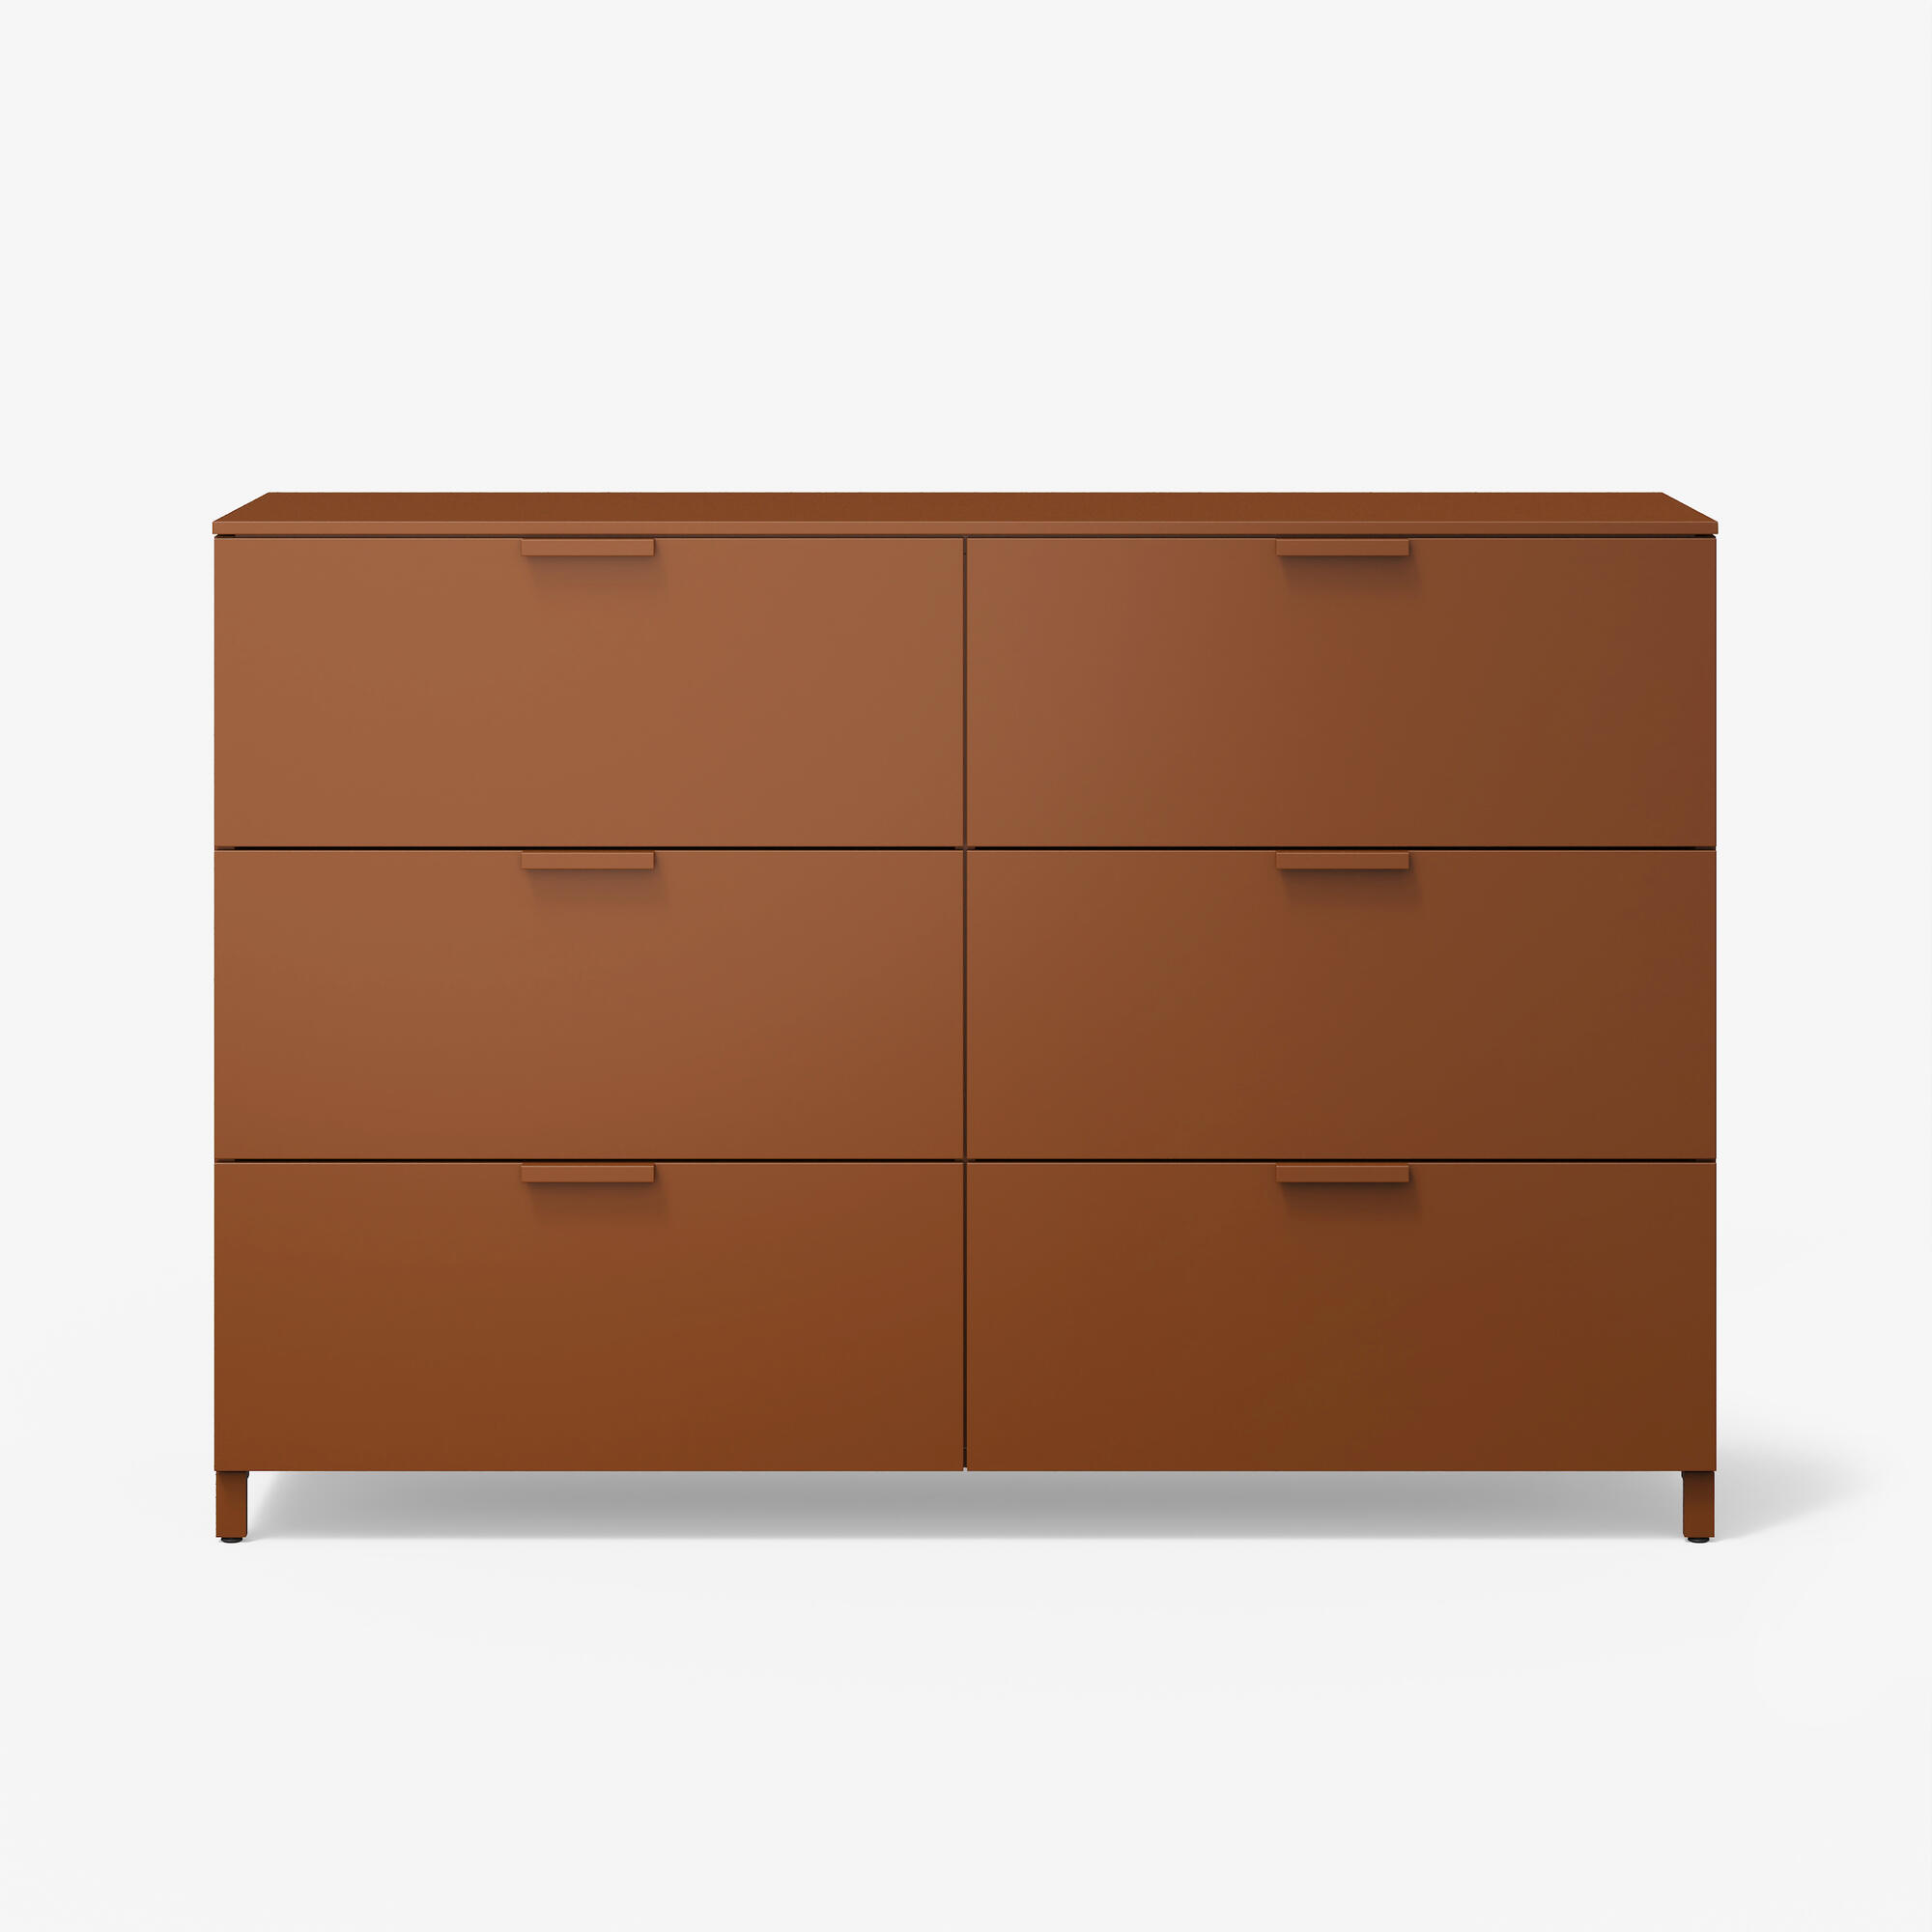 Image Sideboard unit 6 drawers c 23 1